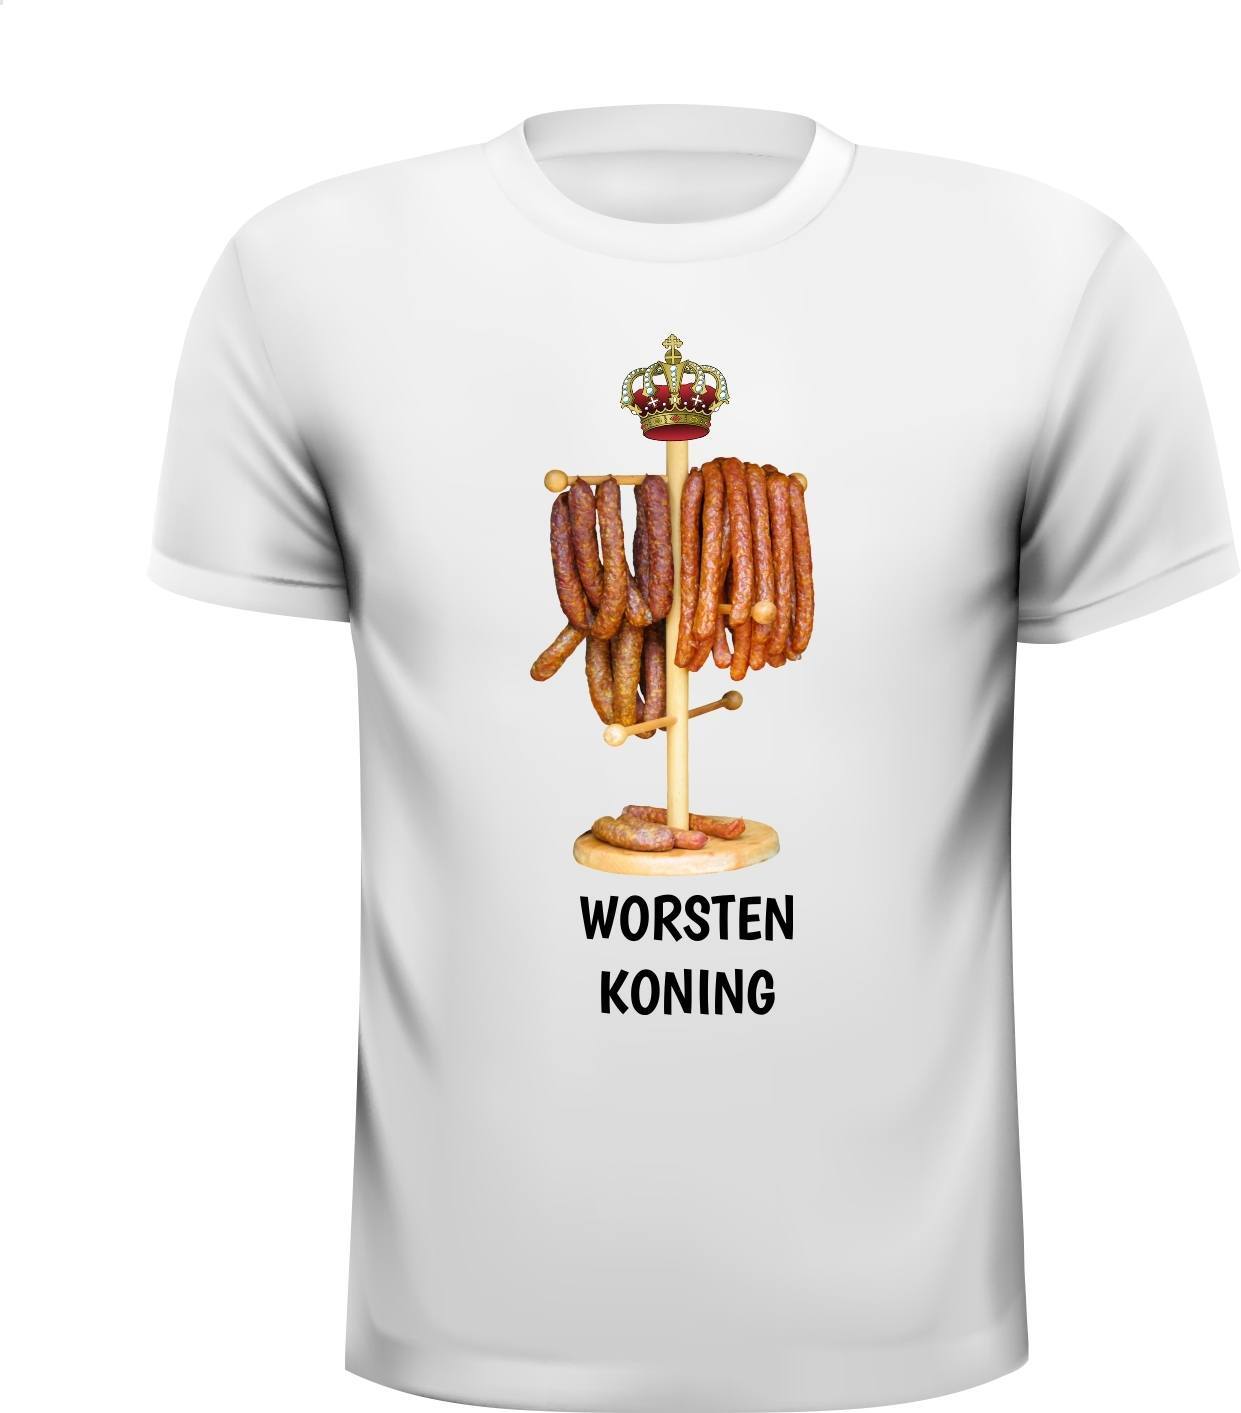 Worsten koning grappig T-shirt eten worst